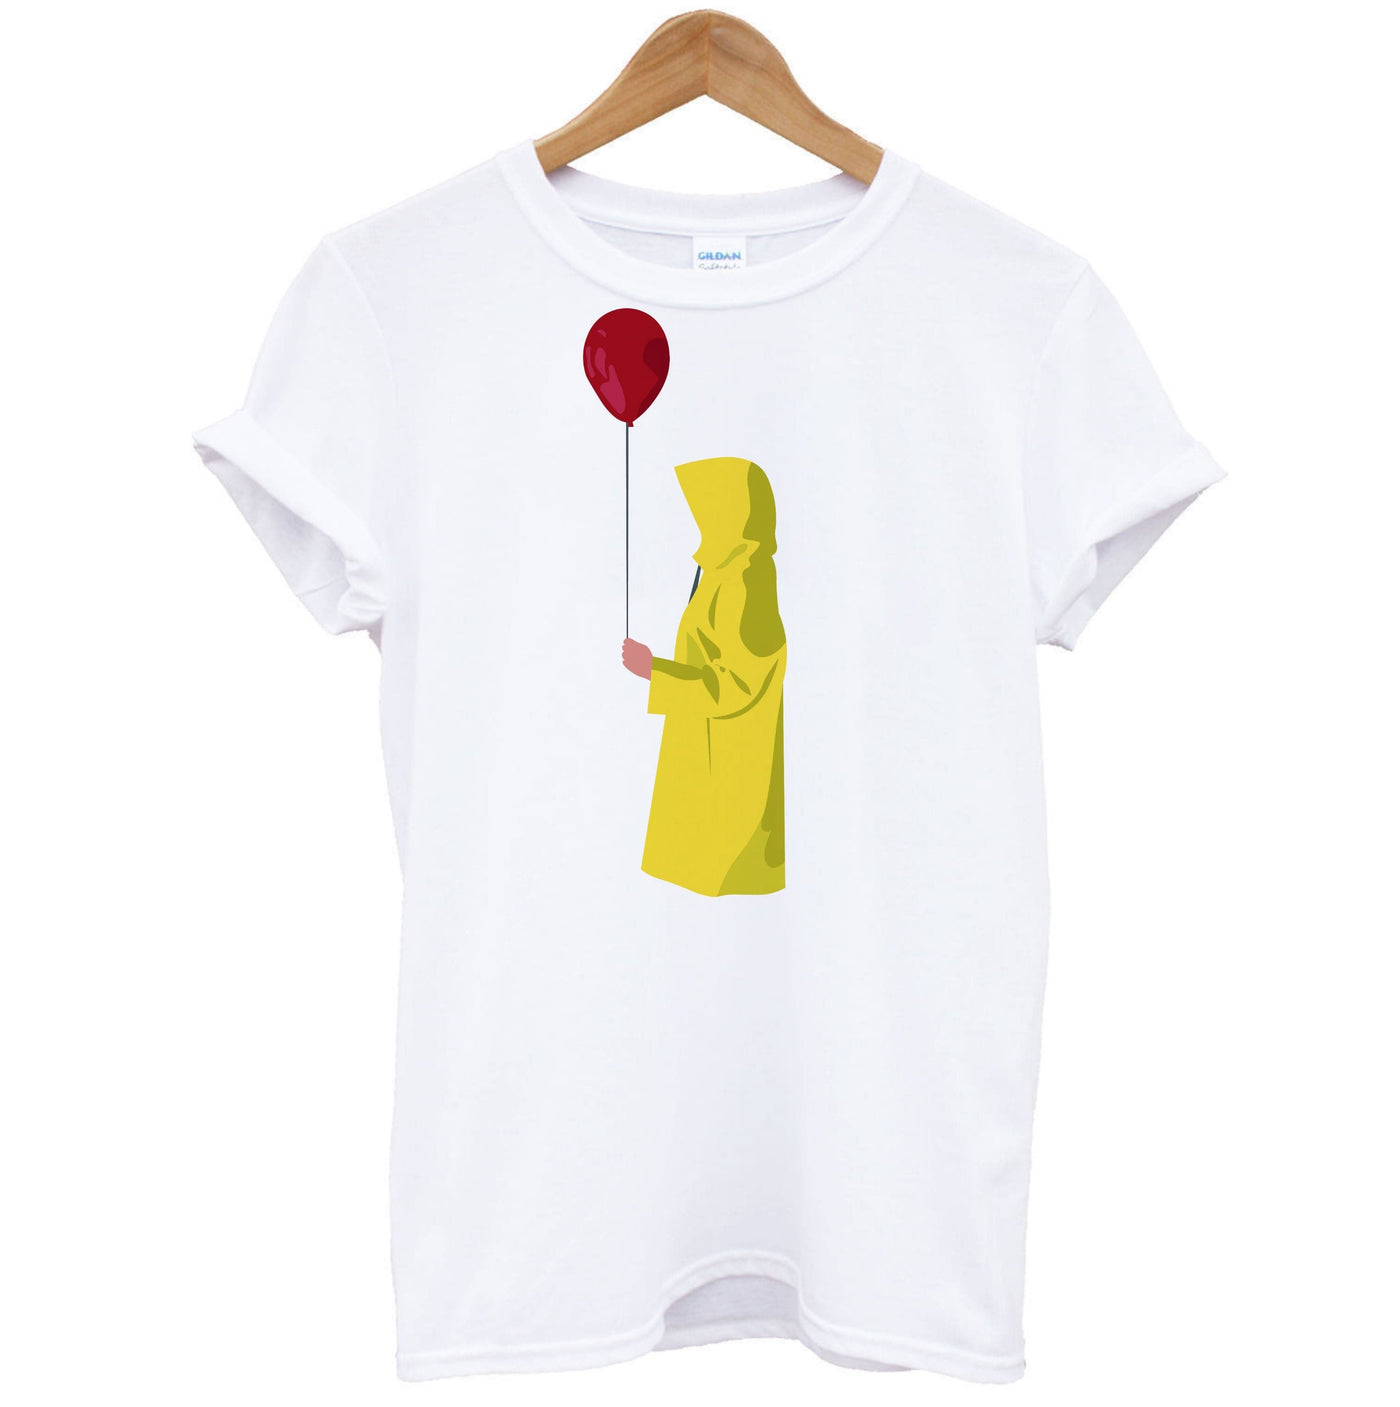 Holding Balloon - IT The Clown T-Shirt